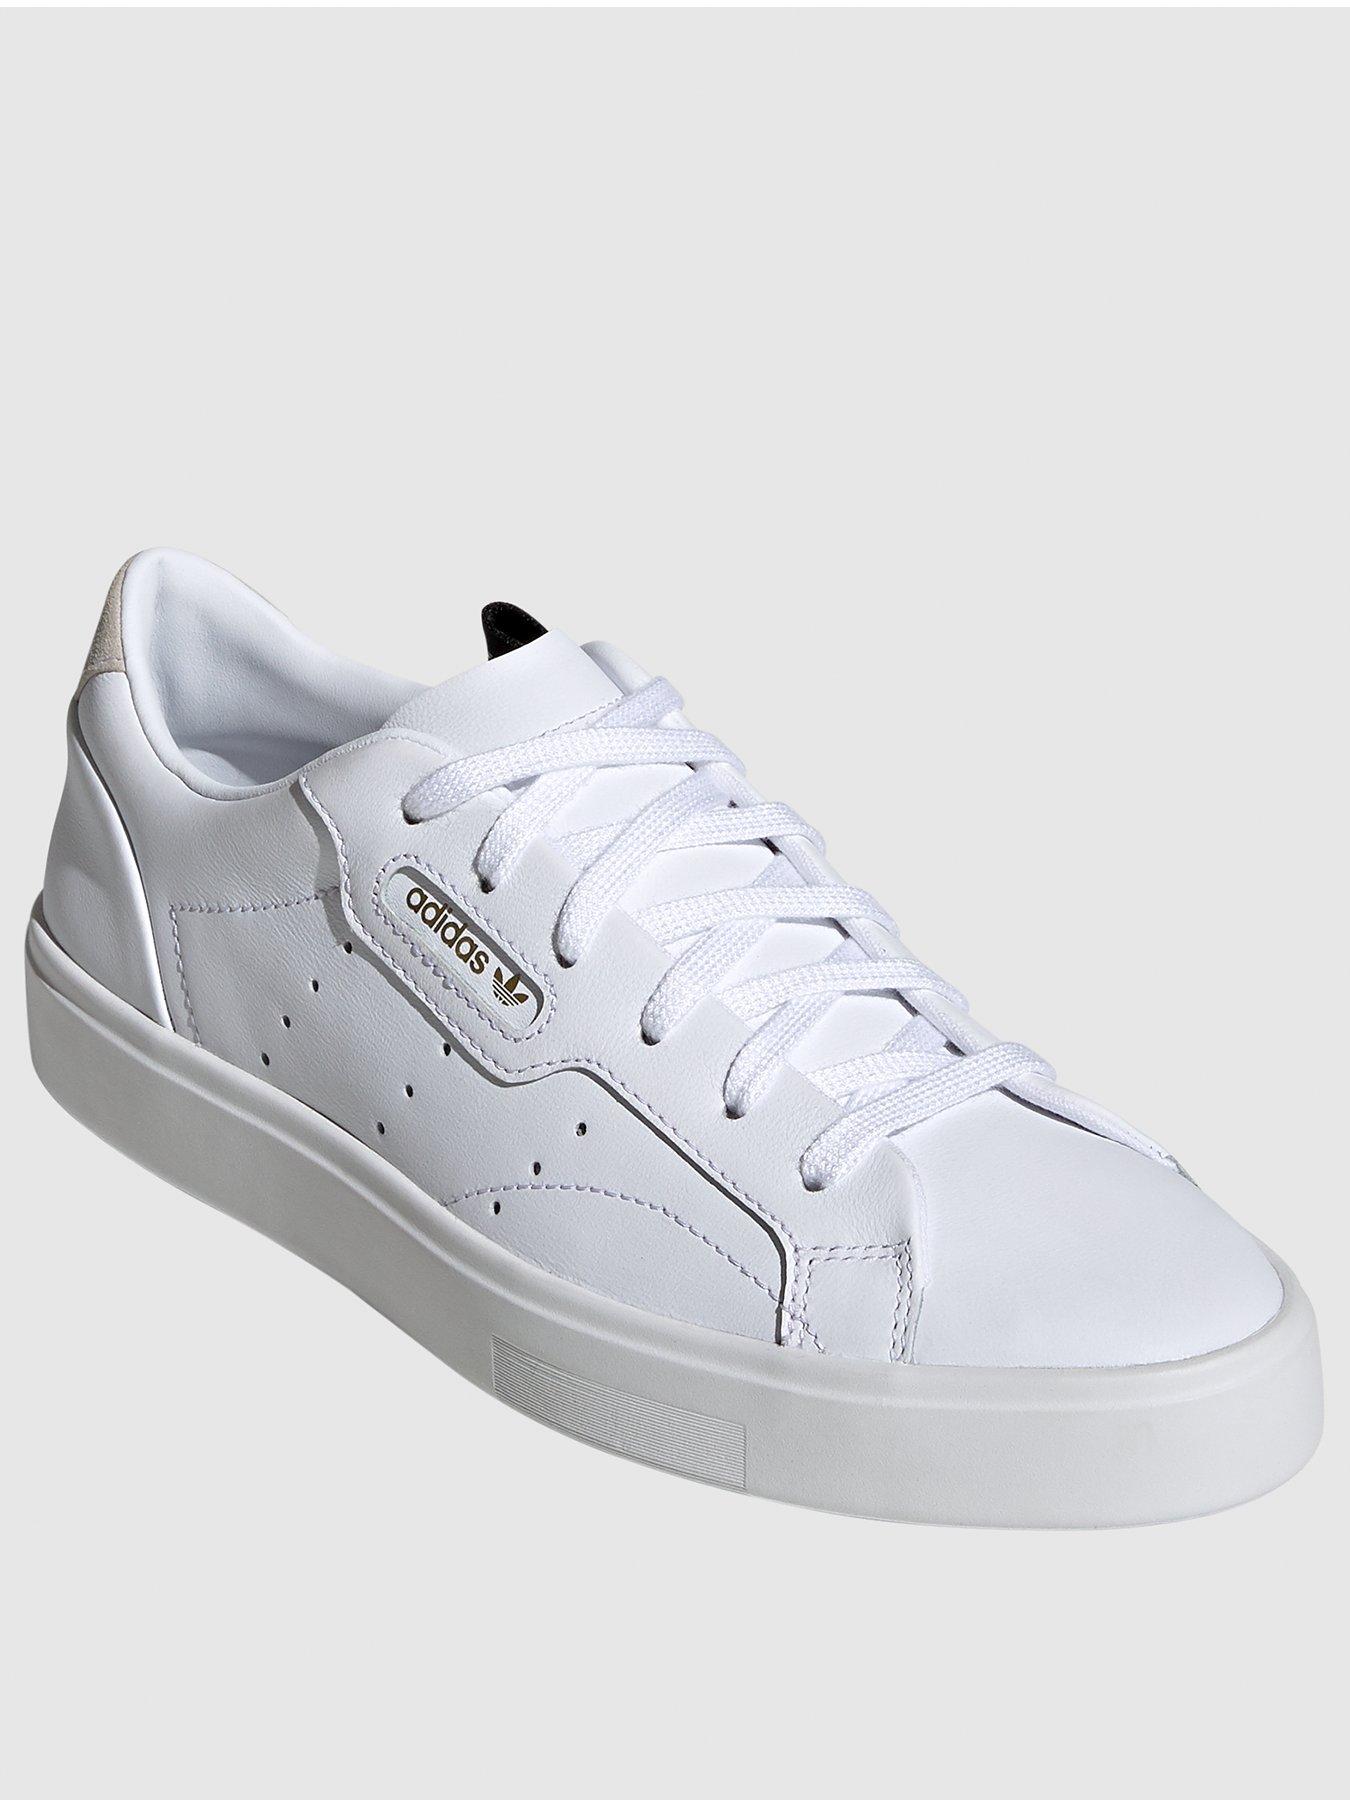 adidas originals white sleek trainers